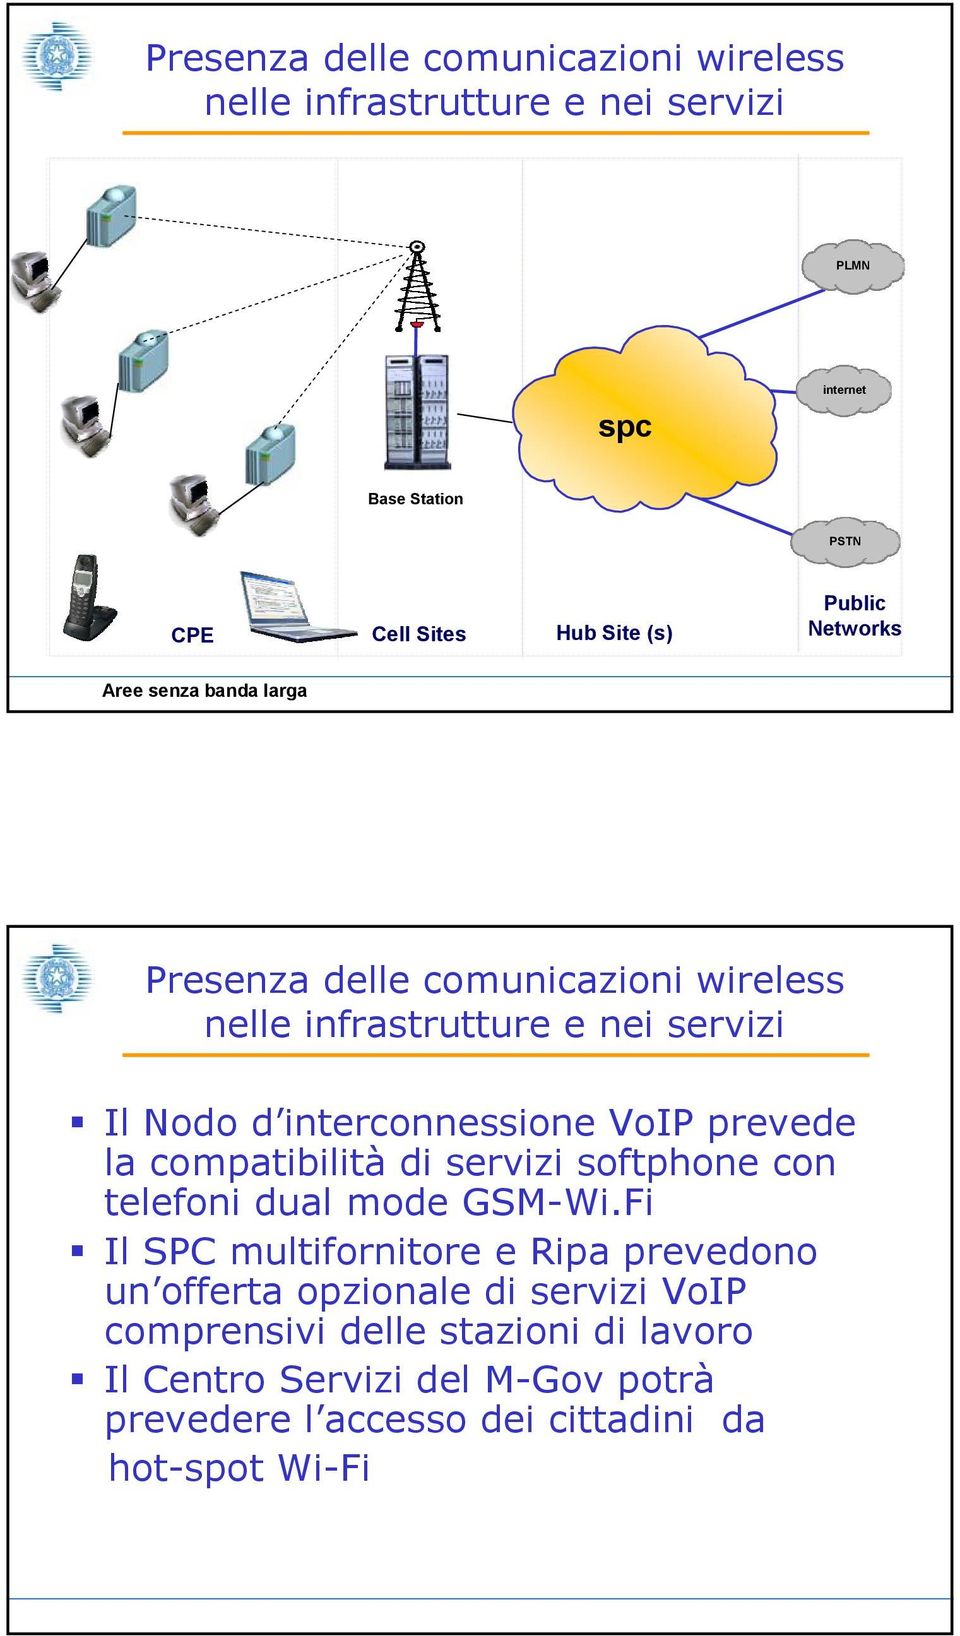 servizi softphone con telefoni dual mode GSM-Wi.